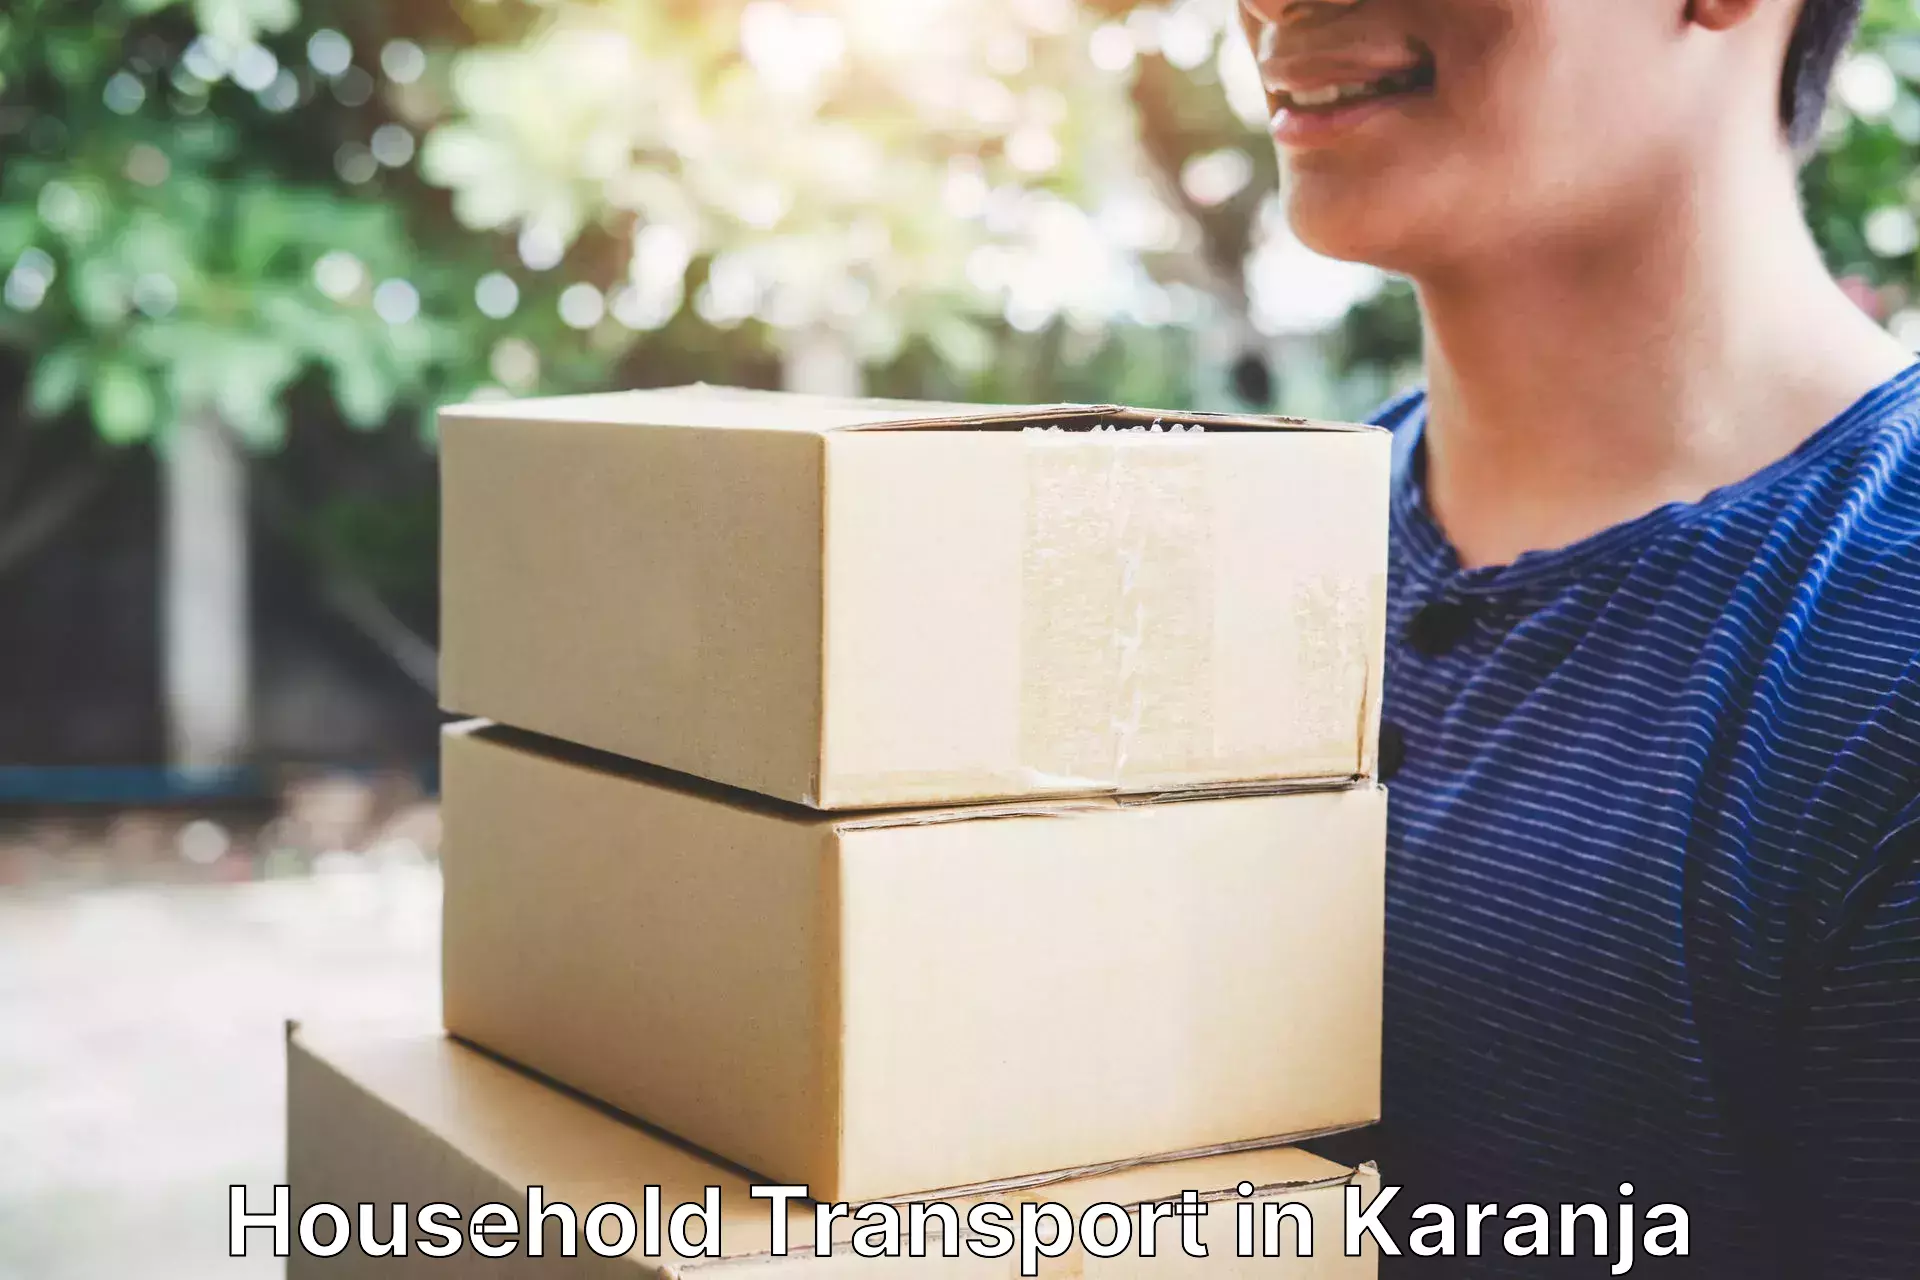 Household goods transport service in Karanja